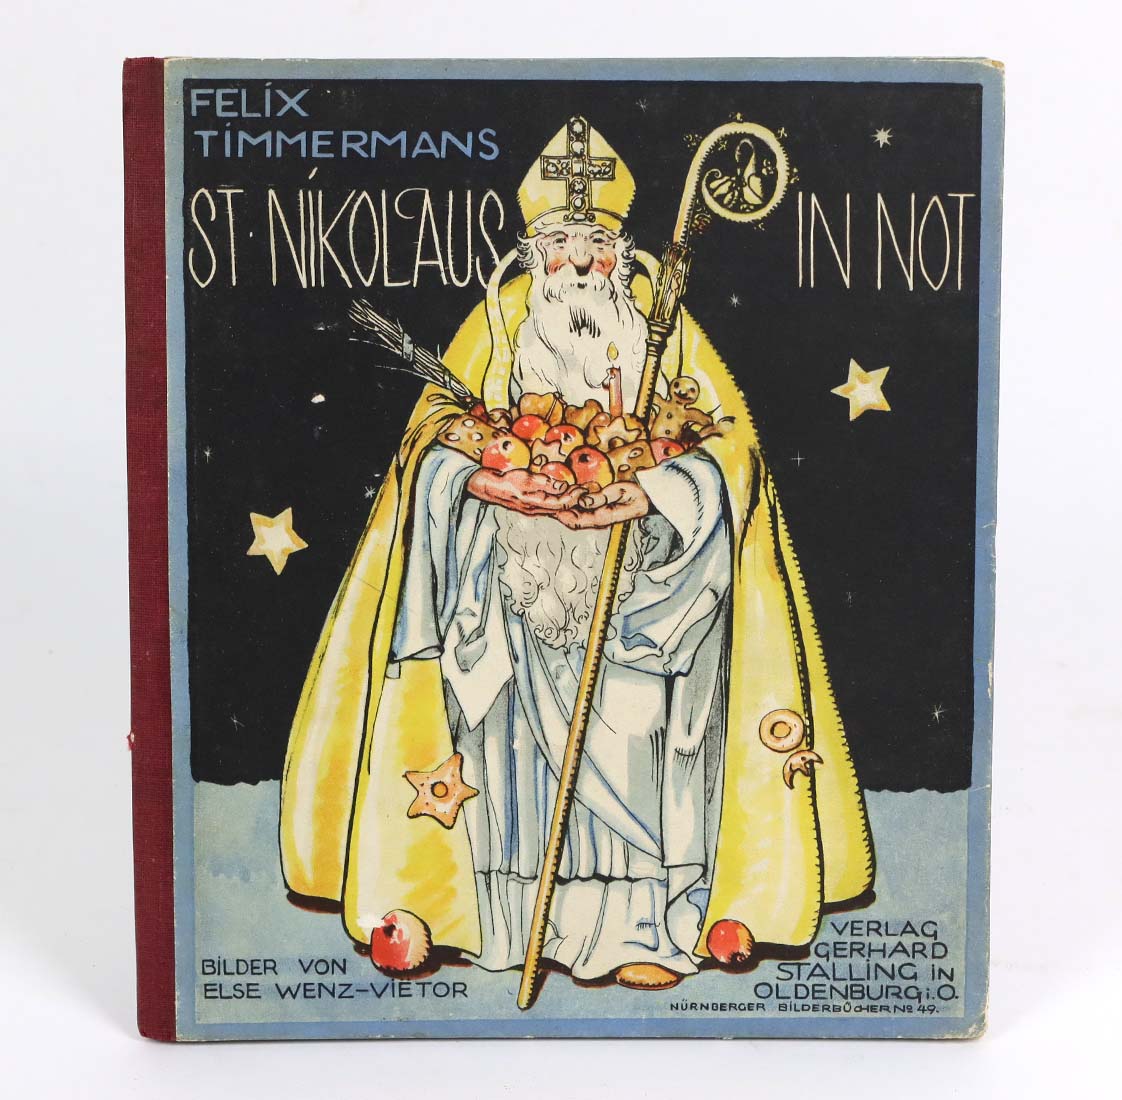 St. Nikolaus in NotFelix Timmermans, Bilder v. Else Wenz-Vietor, Verlag Gerhard Stalli